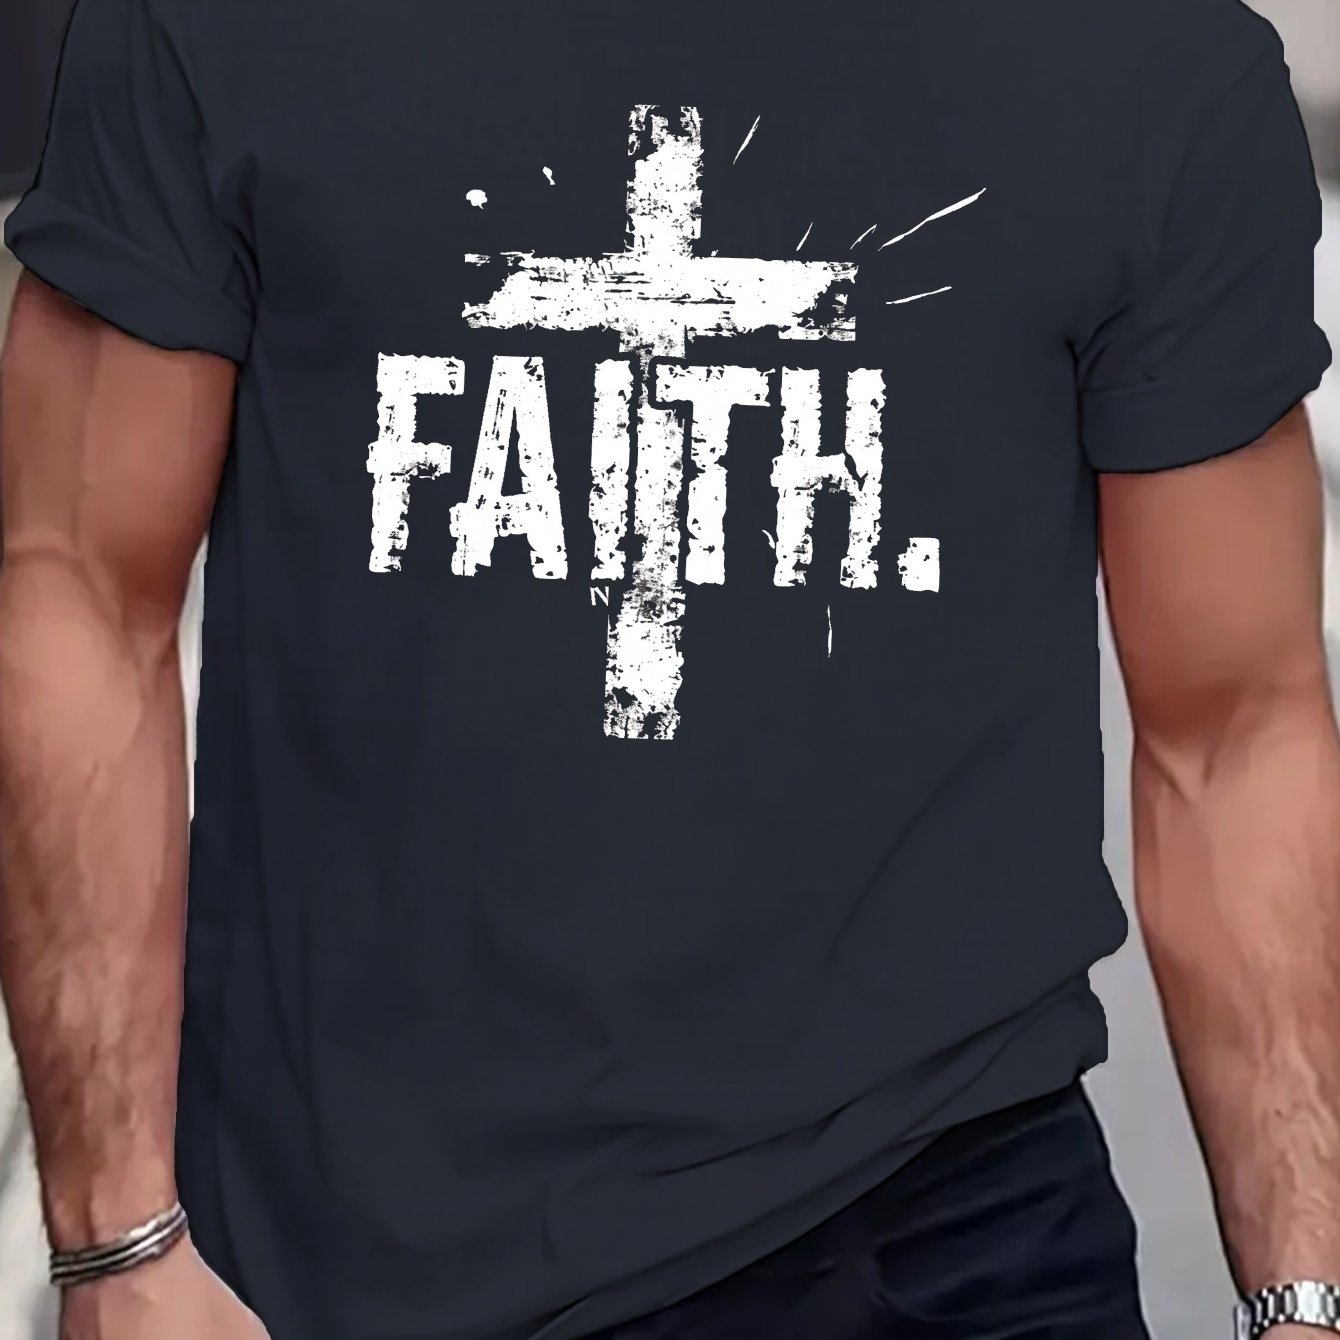 Faith On The Cross Men's Christian T-shirt claimedbygoddesigns